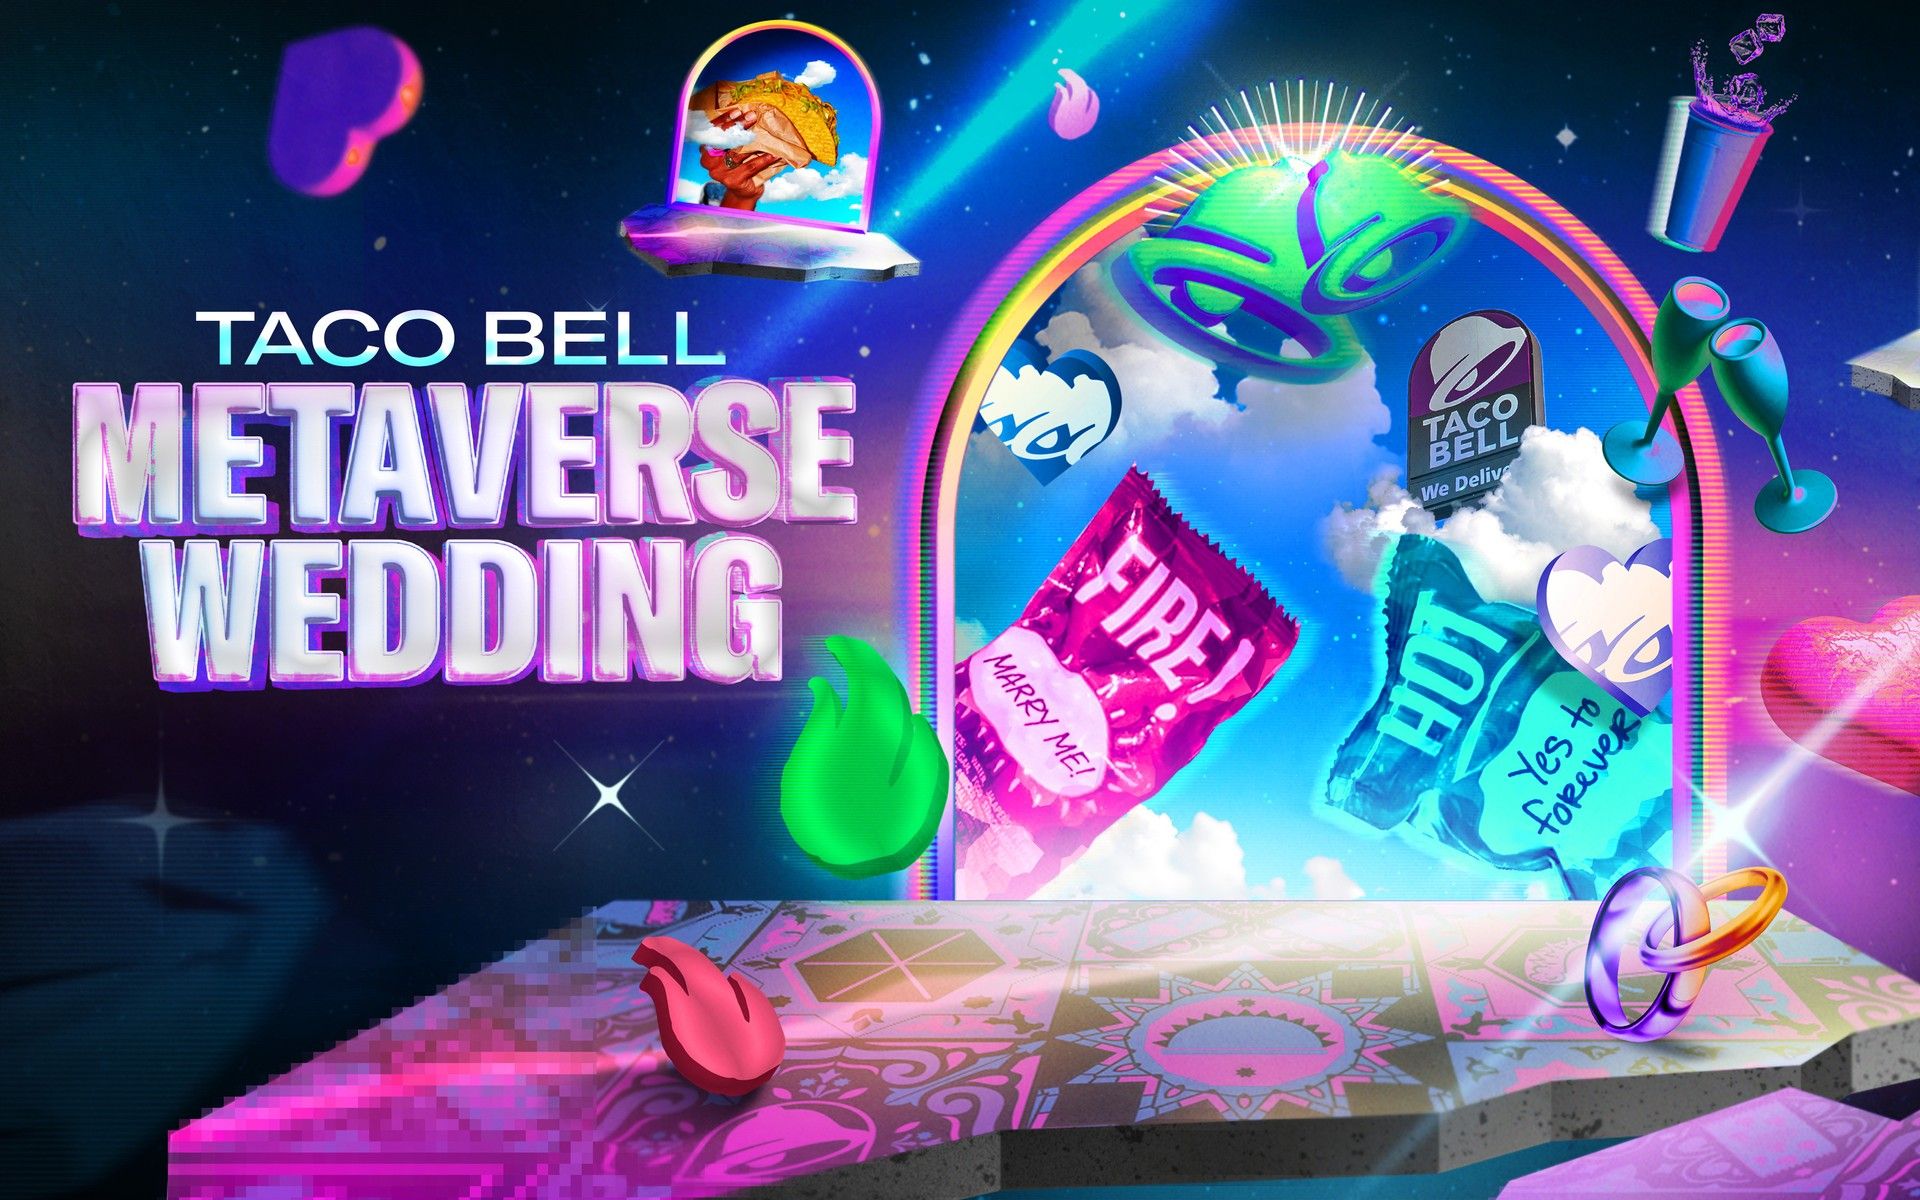 Historia ślubu Taco Bell Metaverse: od Crunchwrap do Metaverse